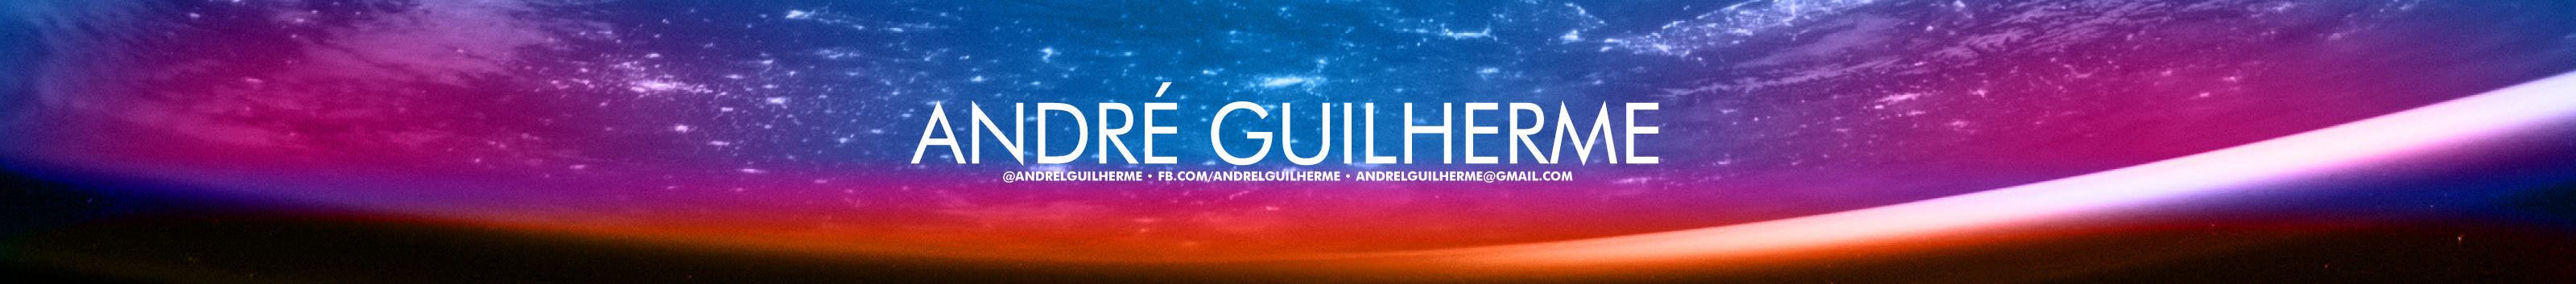 Andre Guilherme's profile banner